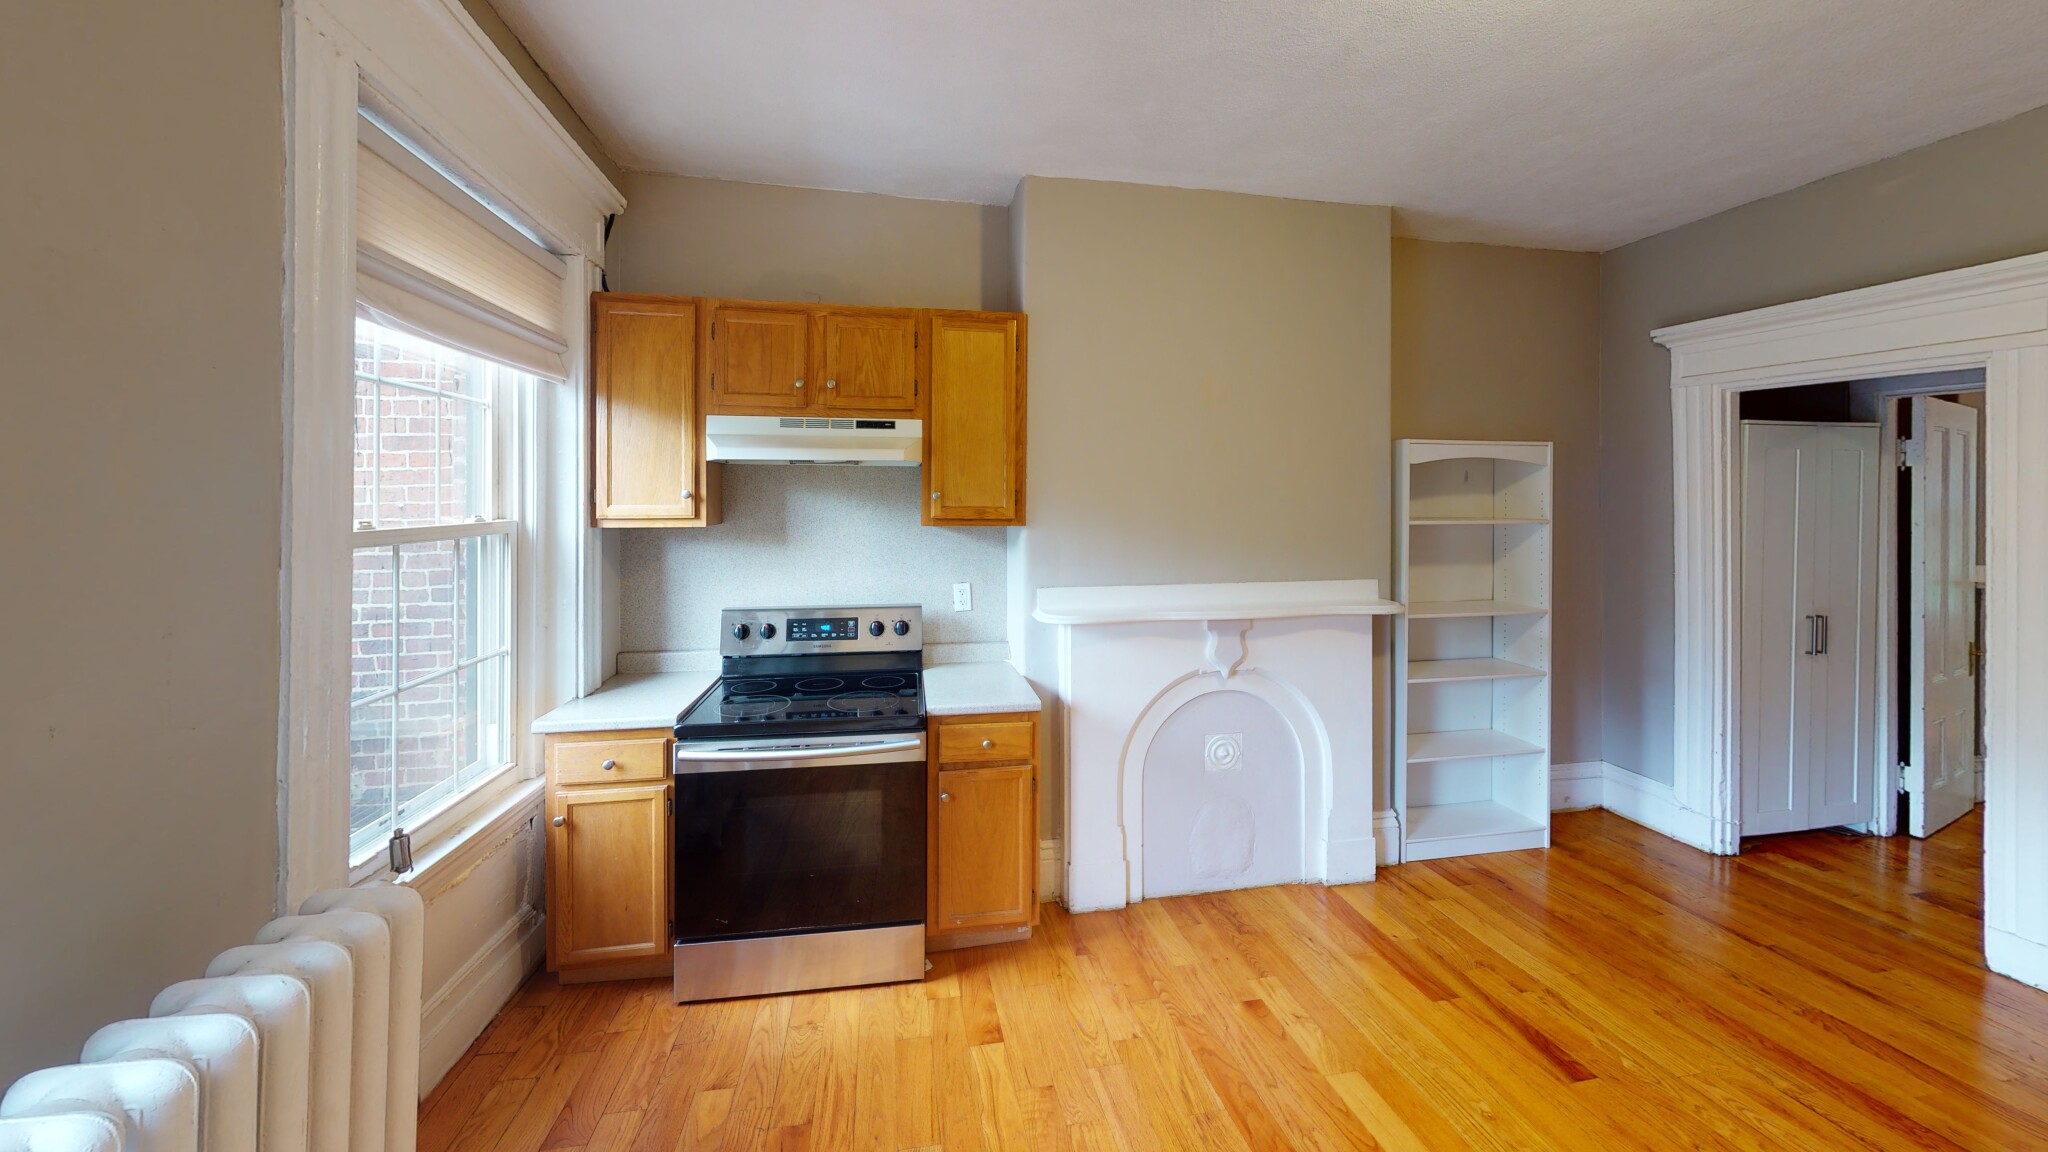 Photos of apartment on Dwight St.,Boston MA 02118